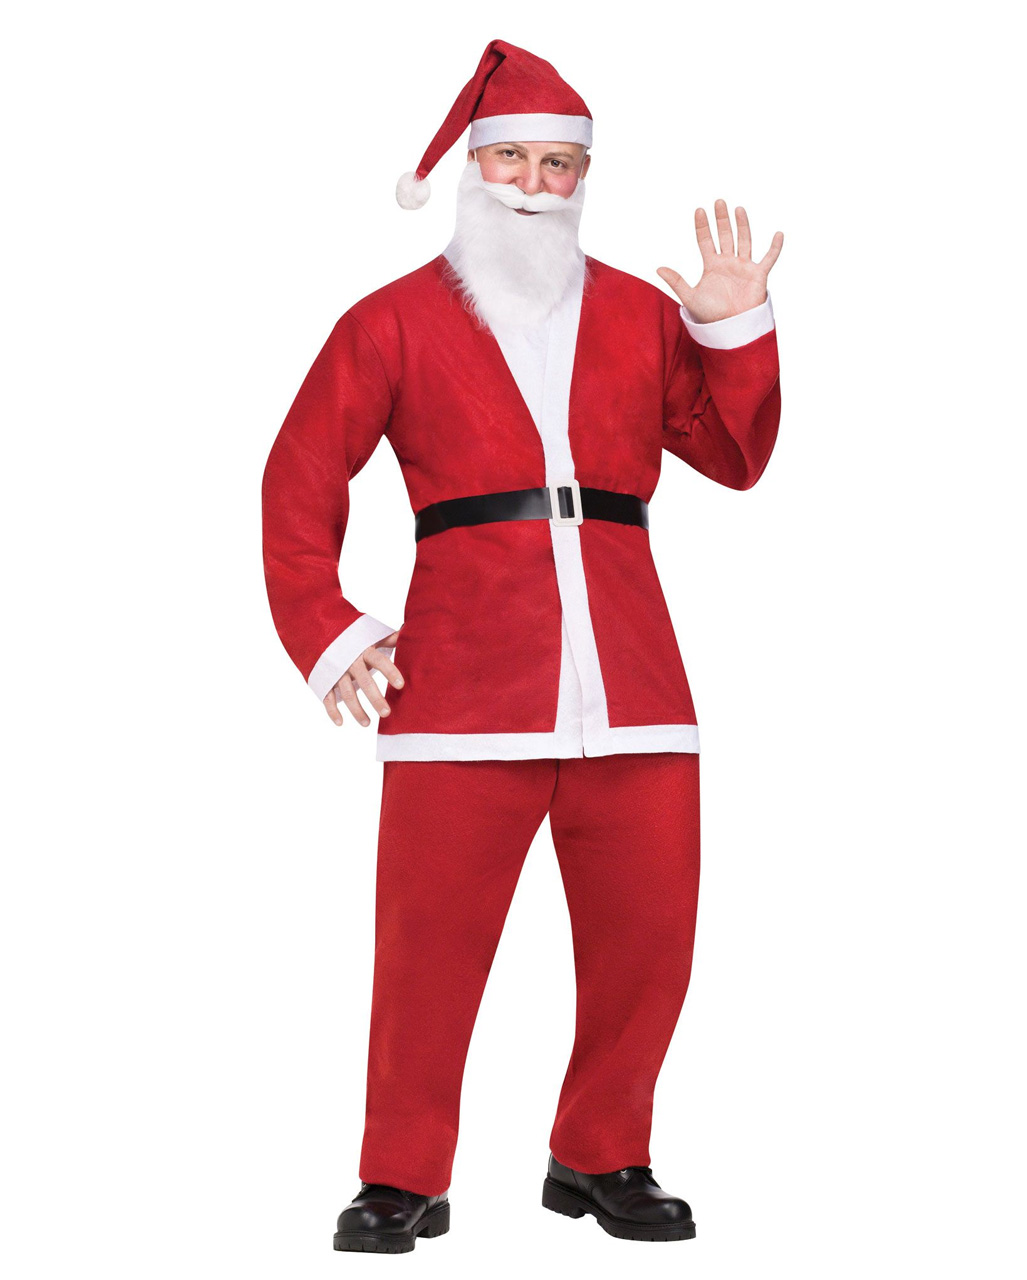 Новогодний костюм нового года. Костюм Деда Мороза. Одежда Санта Клауса. Новогодний костюм Санта-Клауса. Костюм Деда Мороза новогодний.